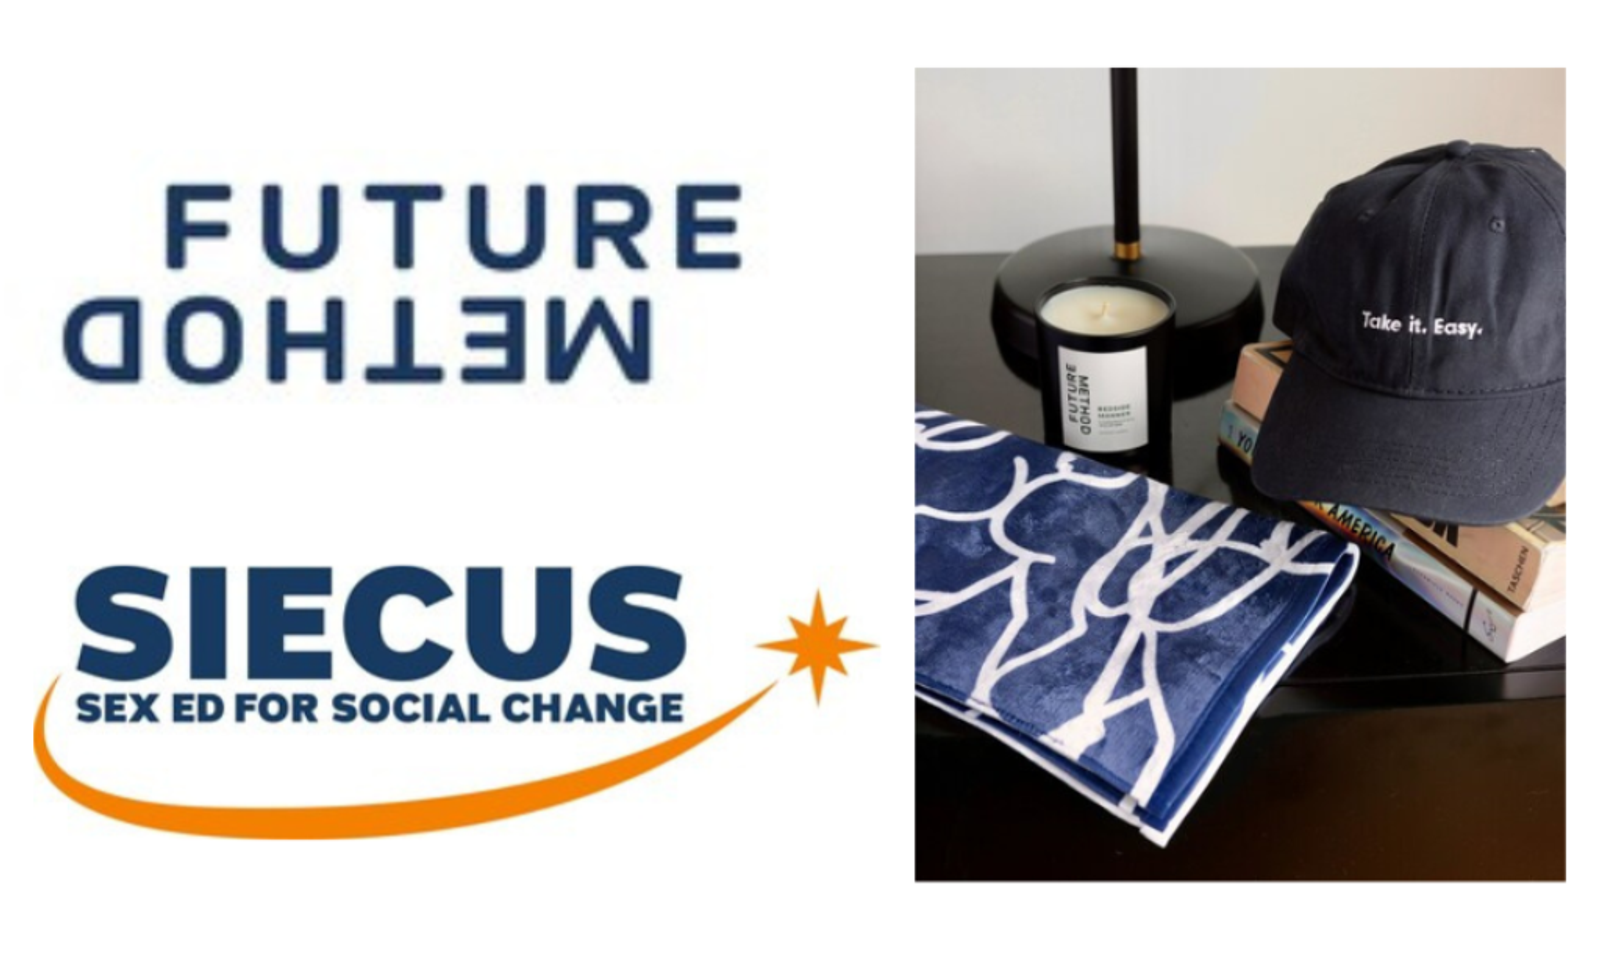 Sexual Wellness Brand Future Method Partners With SIECUS